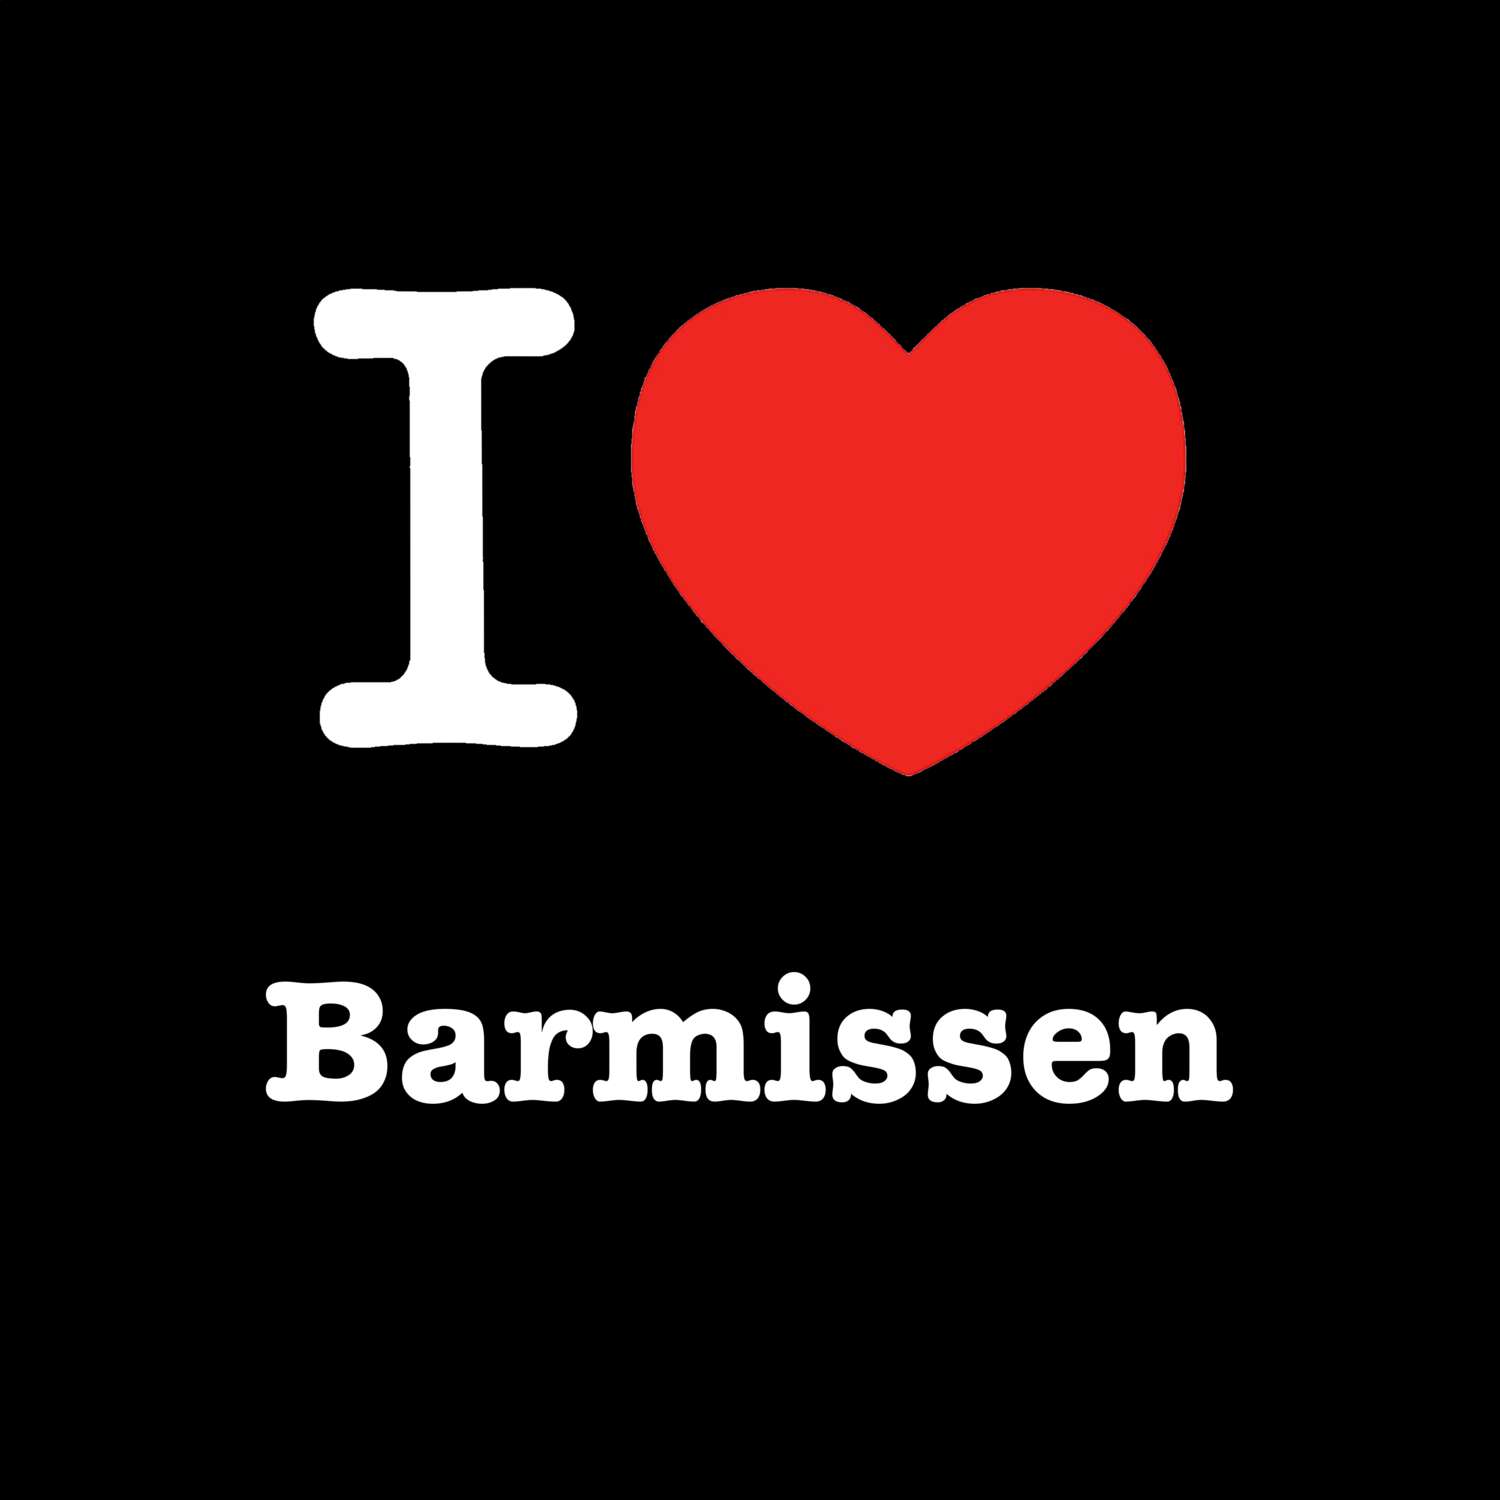 Barmissen T-Shirt »I love«